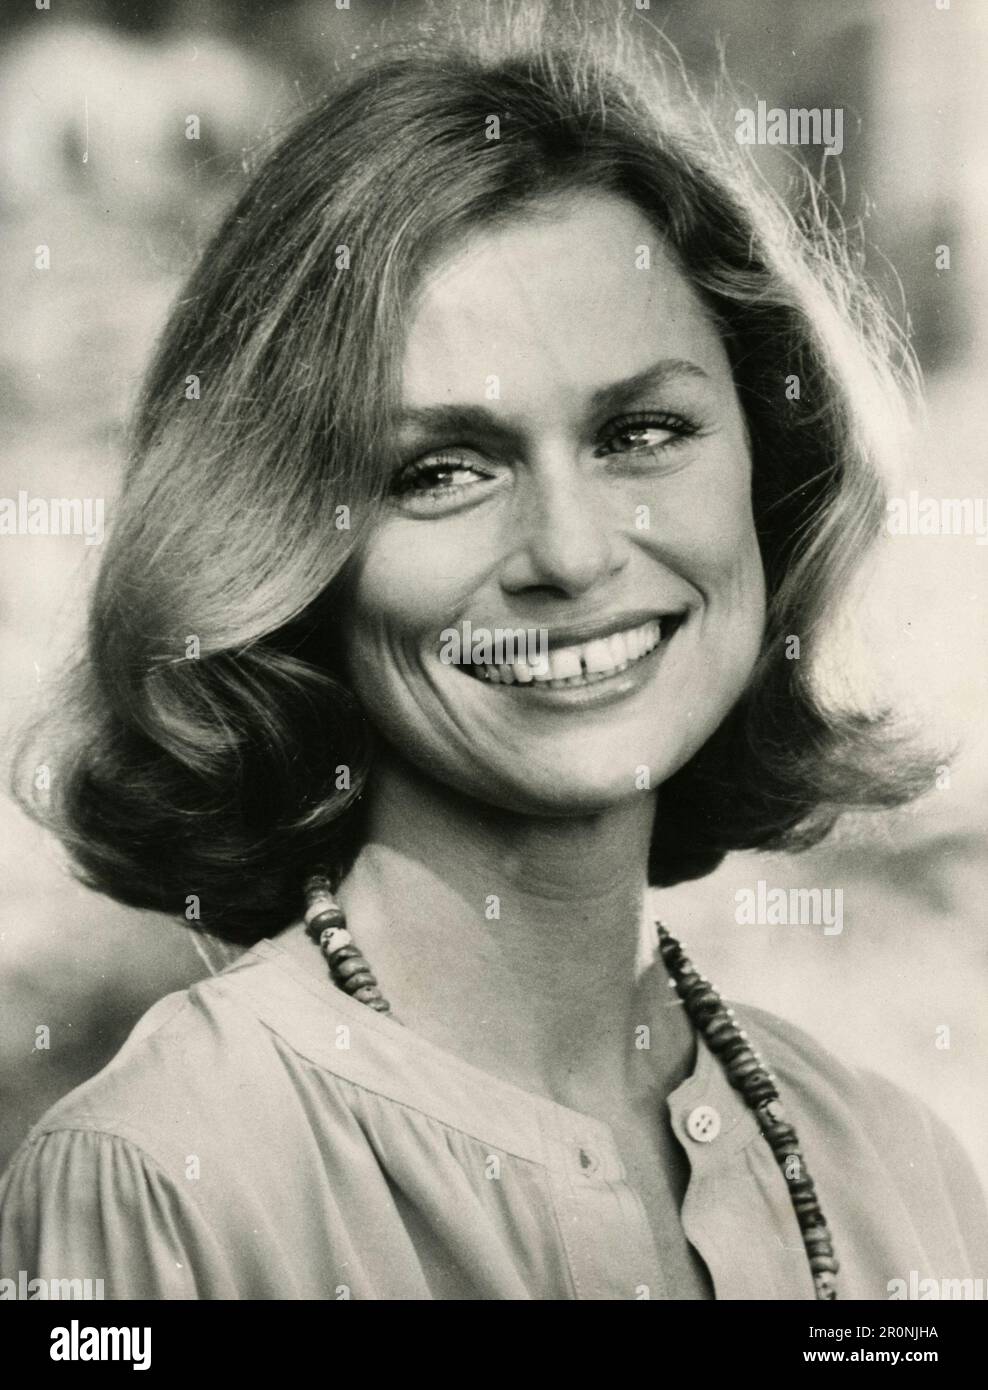 American model and actress Lauren Hutton, UK 1976 Stock Photo